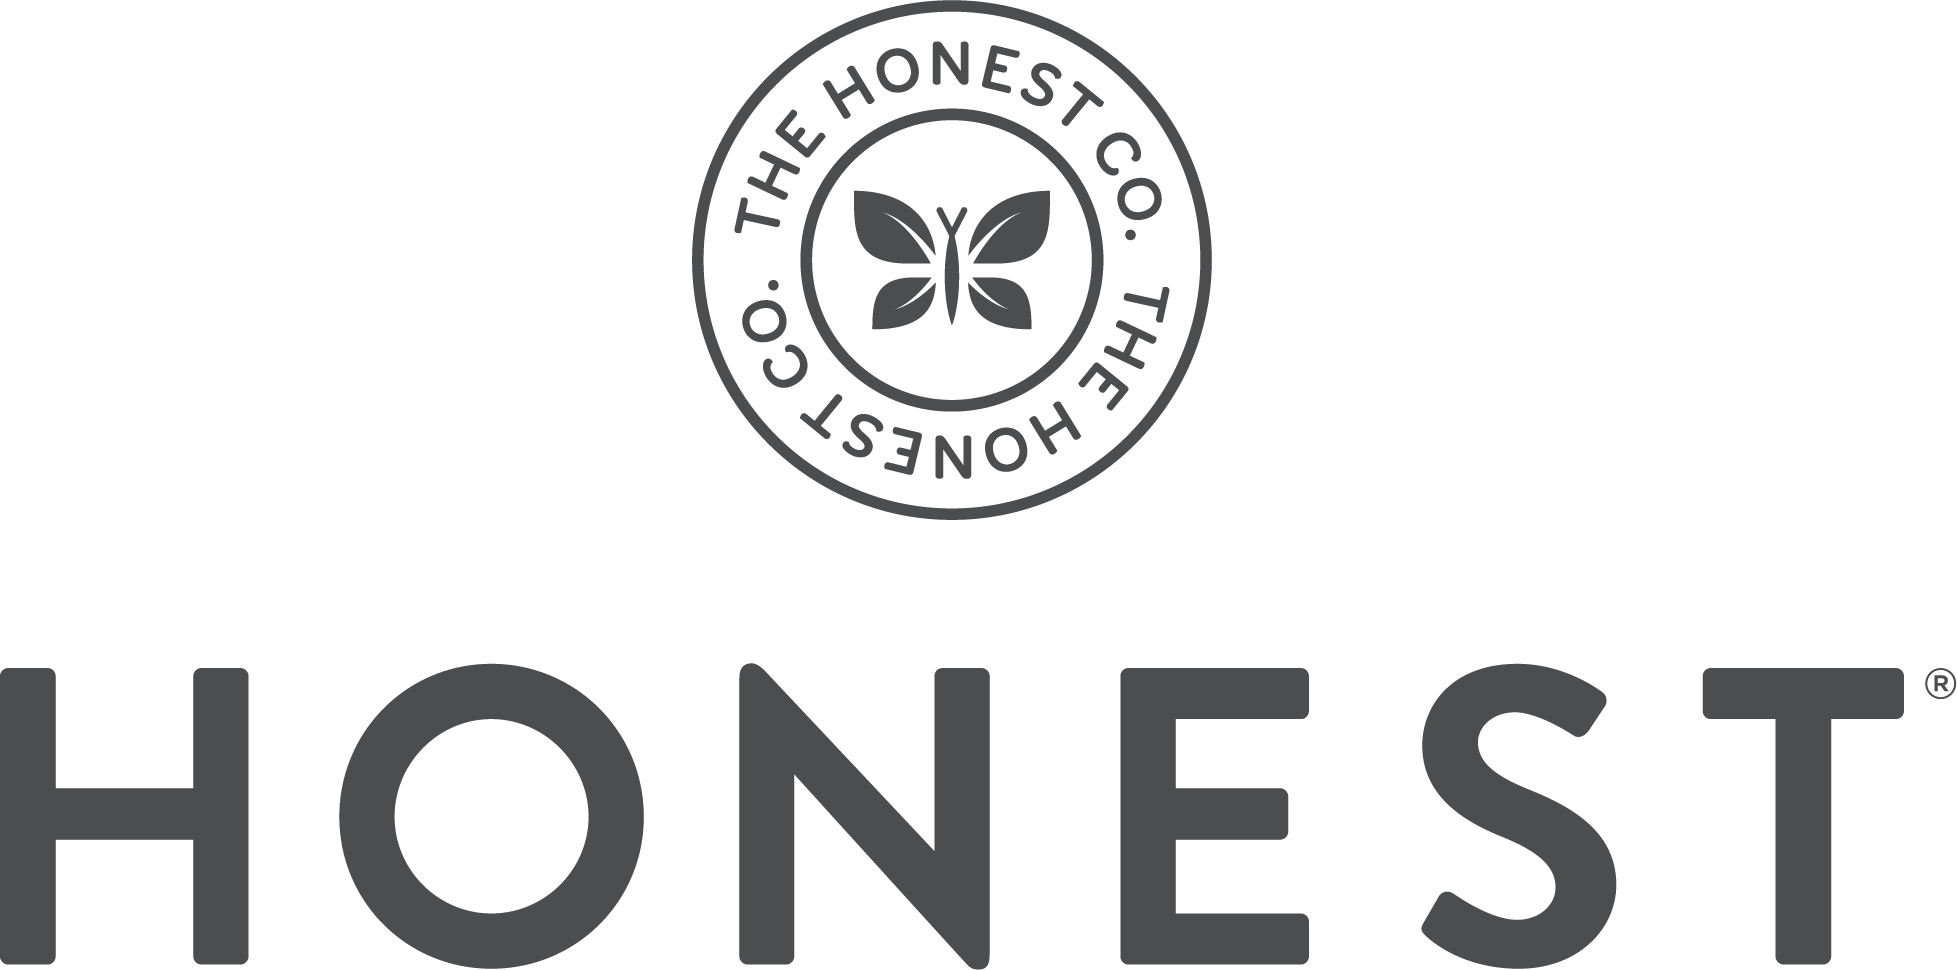 Honestea - Honest Tea Logo Vector Clipart (#5890411) - PikPng